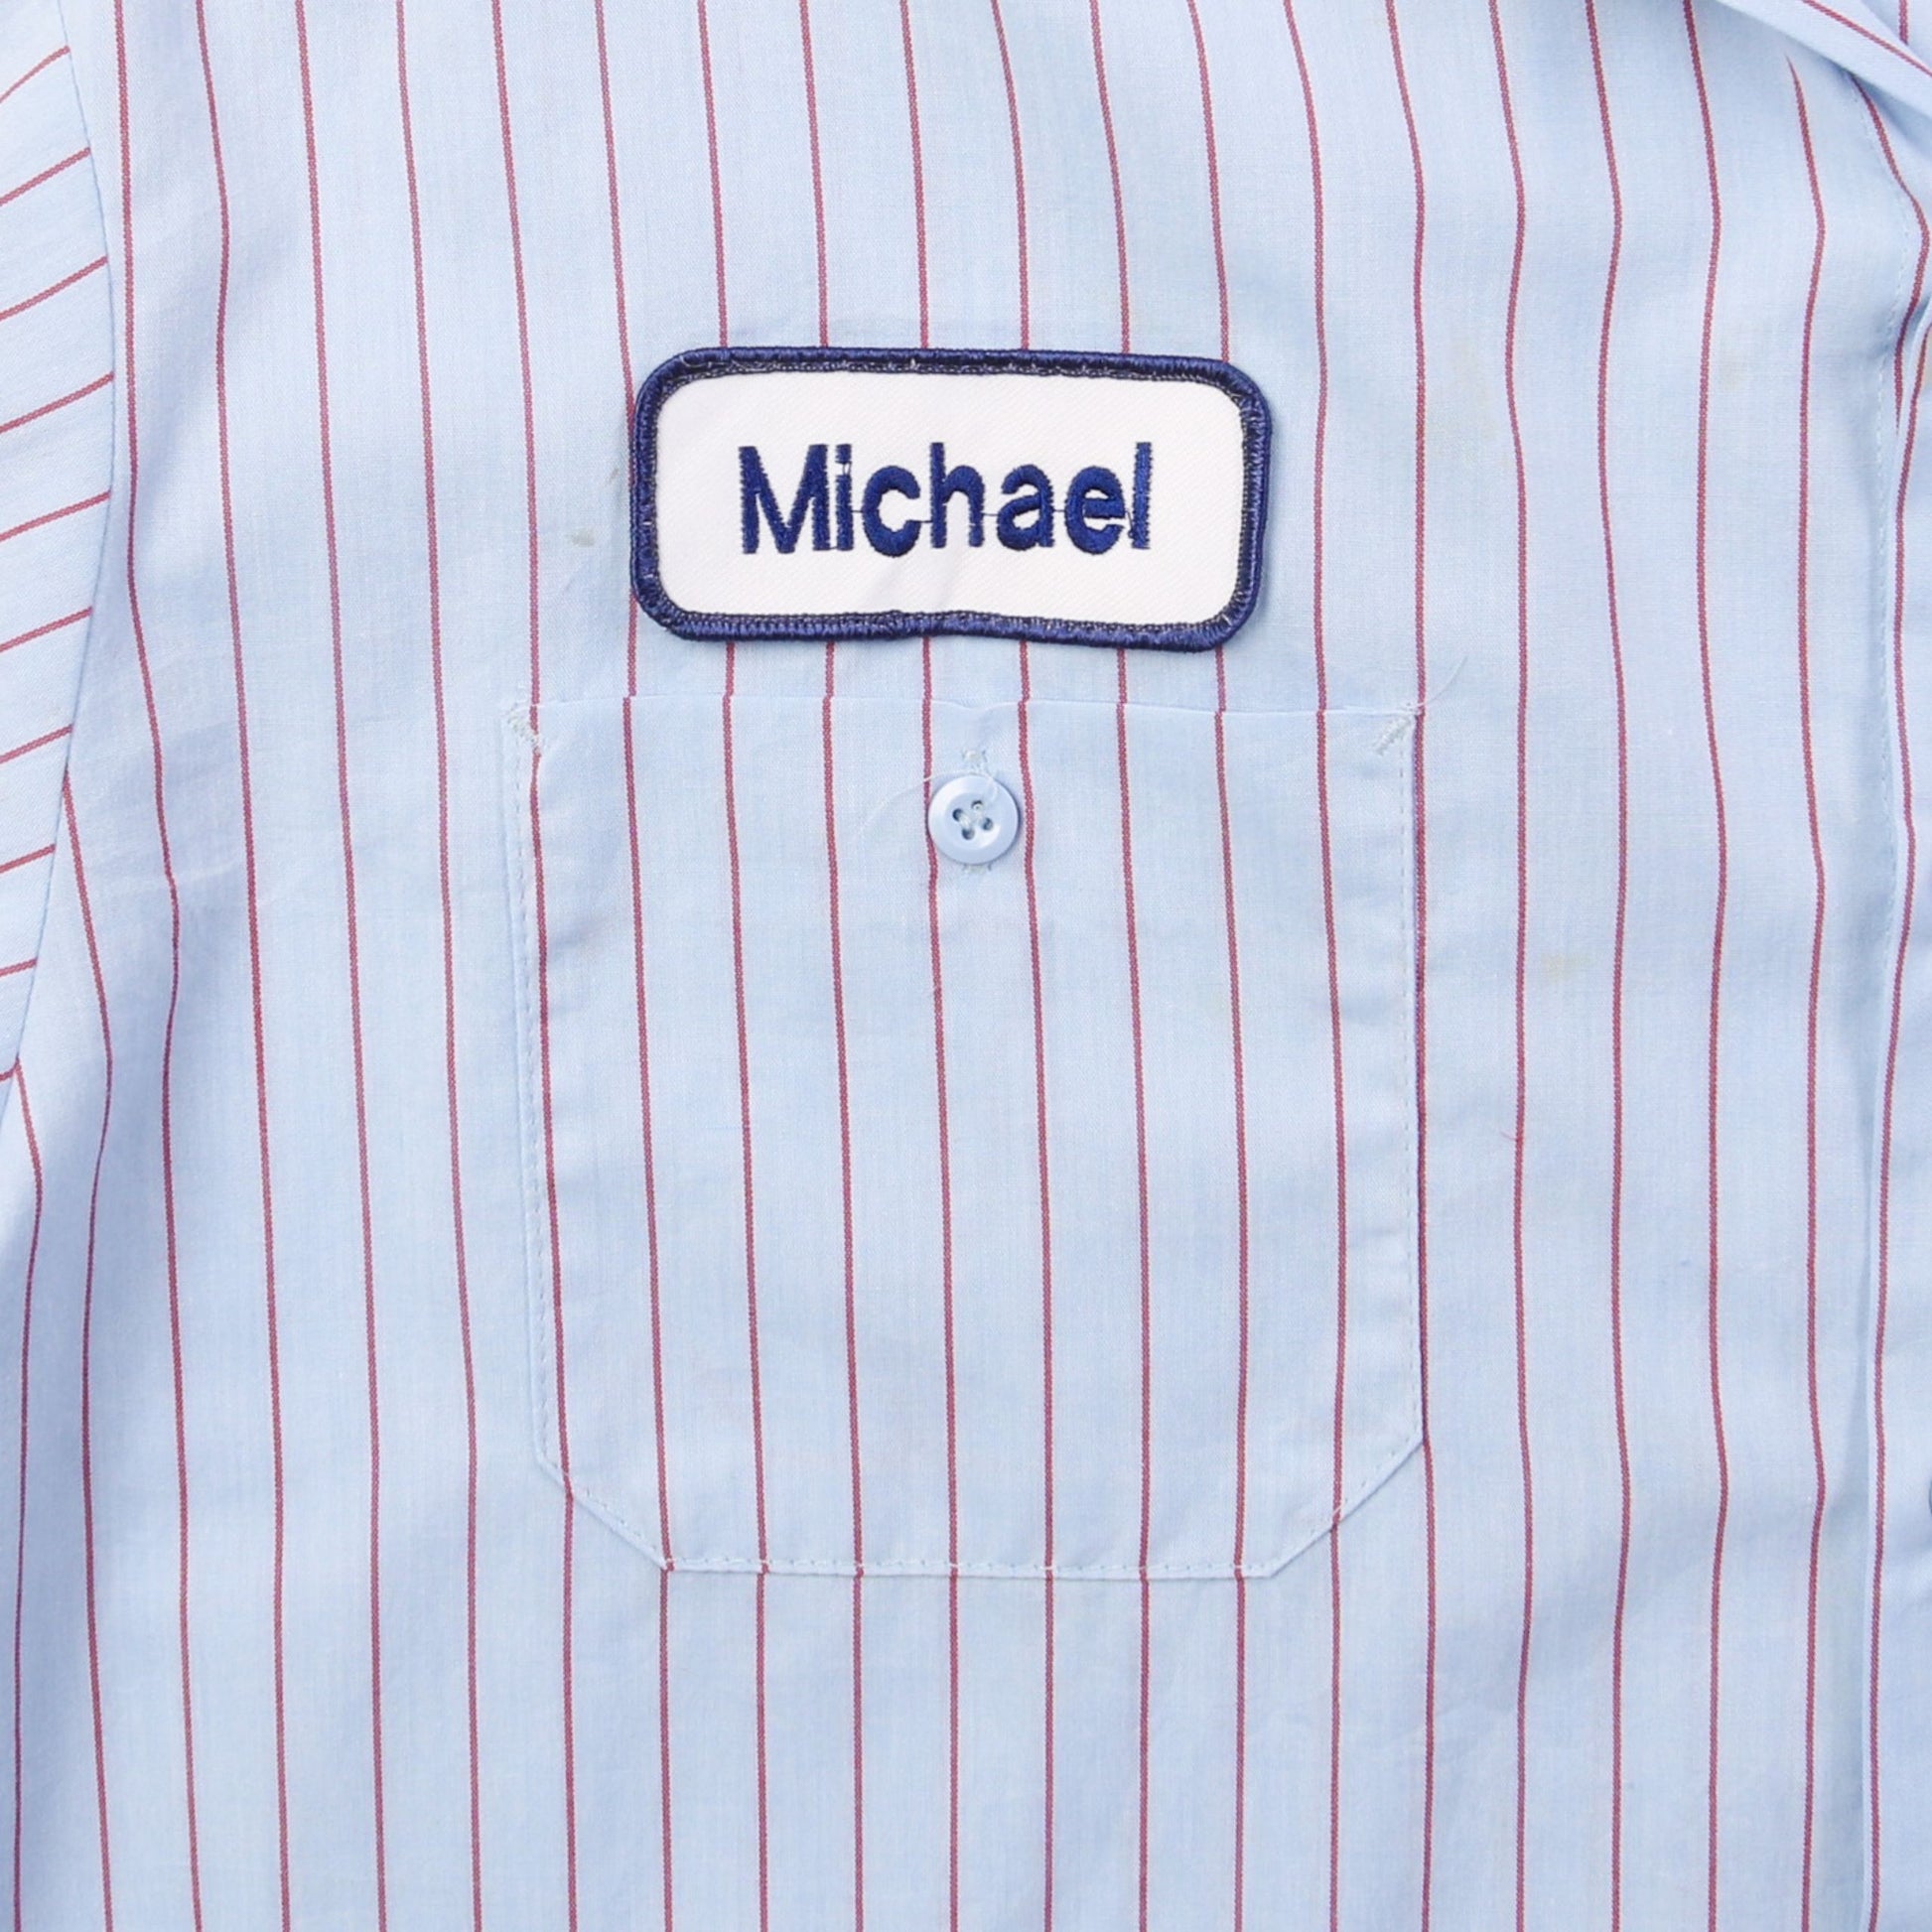 'Michael' Garage Work Shirt - American Madness